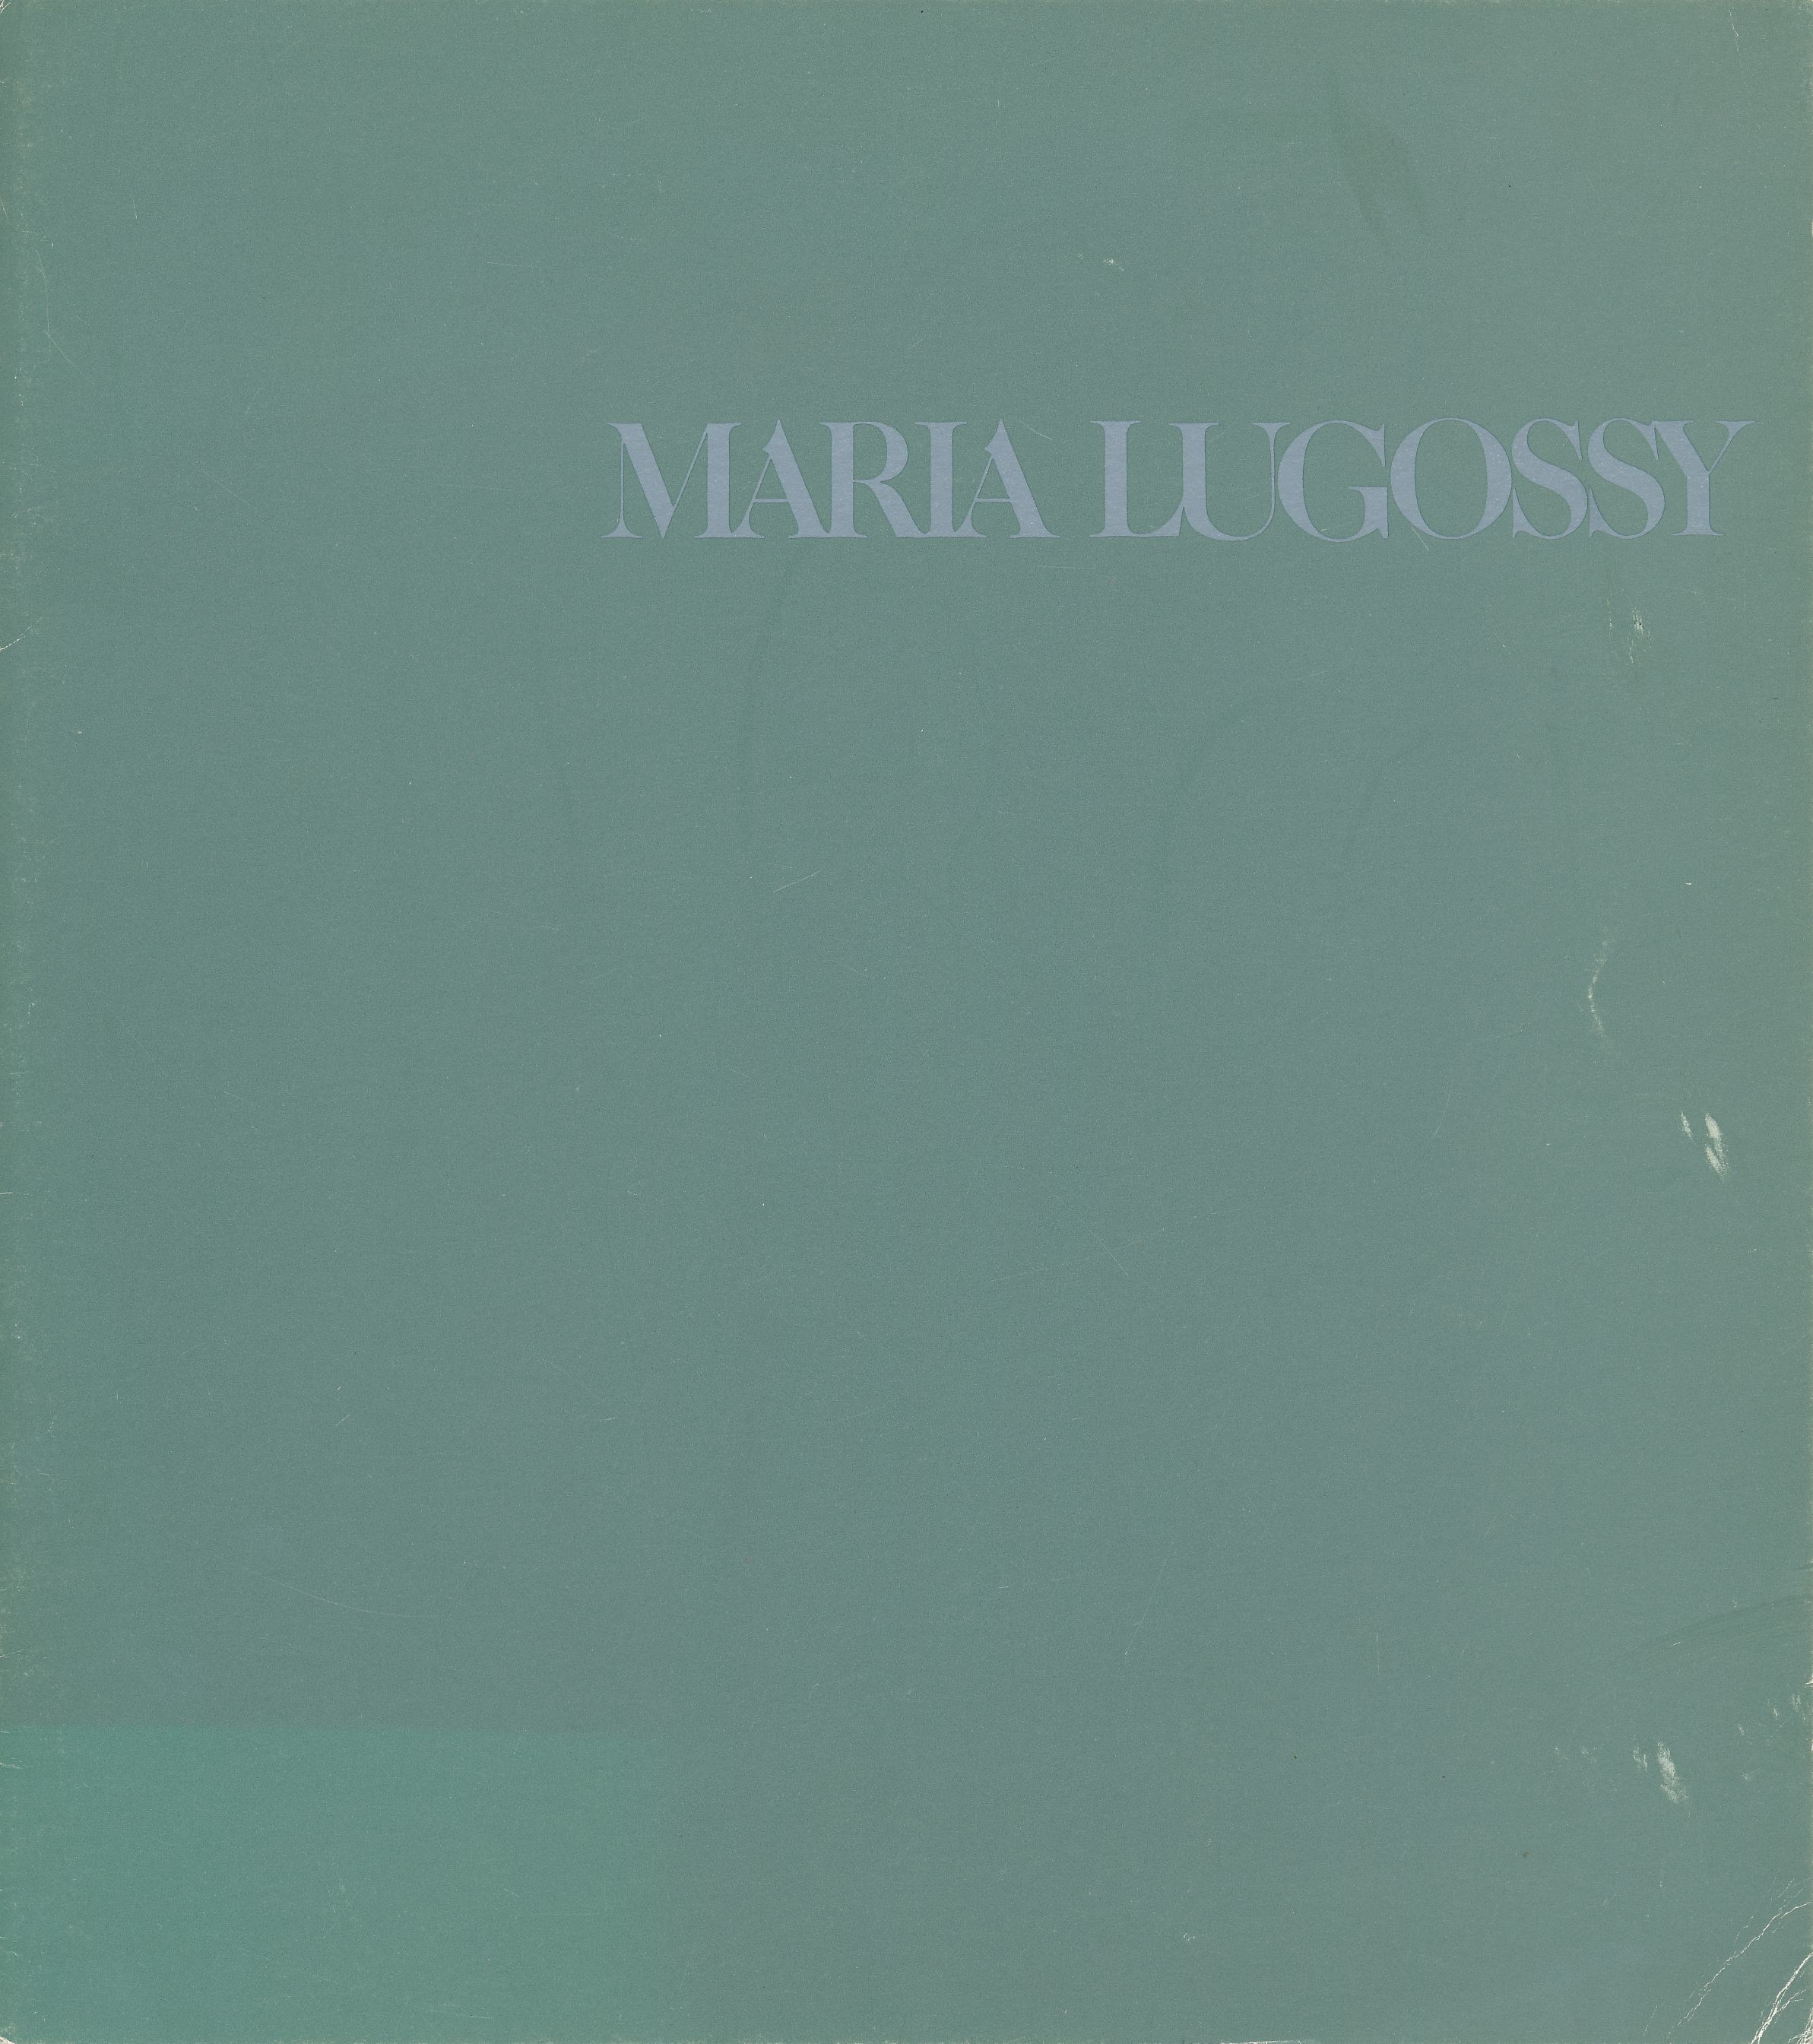 Maria Lugossy Glass Sculpture From Hungary Heller Gallery New York City 1985 (Design DigiTár – Iparművészeti archívum CC BY-NC-SA)